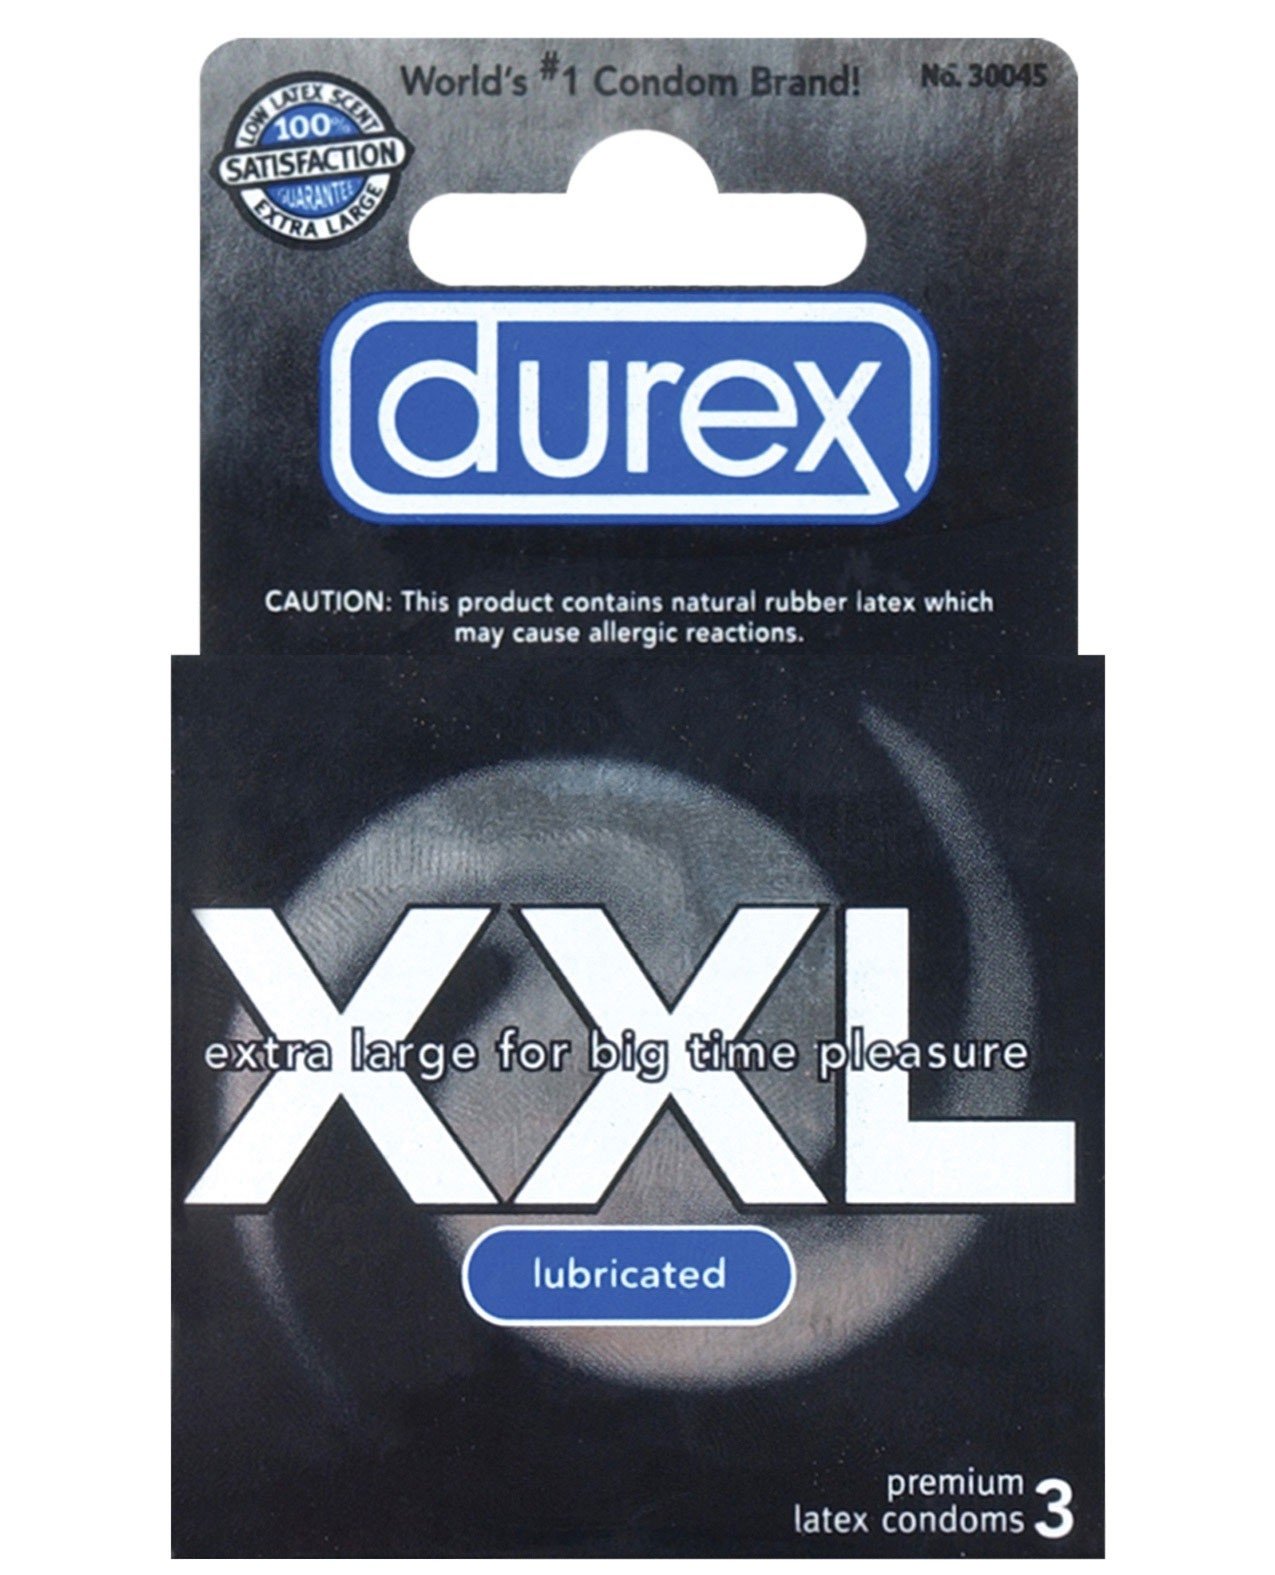 Durex XXL - Box of 3 by Paradise marketing